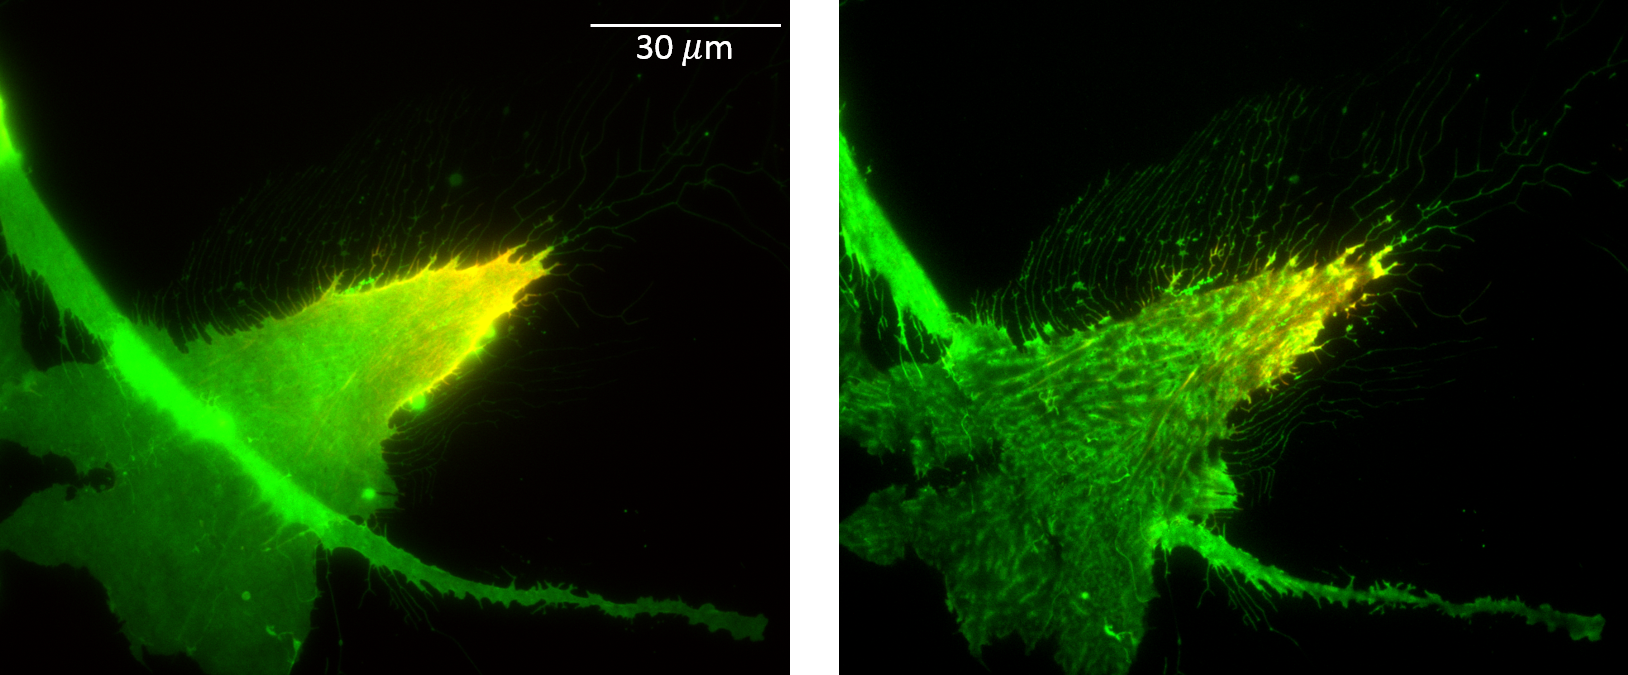 Randomly polarized RPE-1 (retinal pigmented epithelial) cell migrating on fibronectin. 